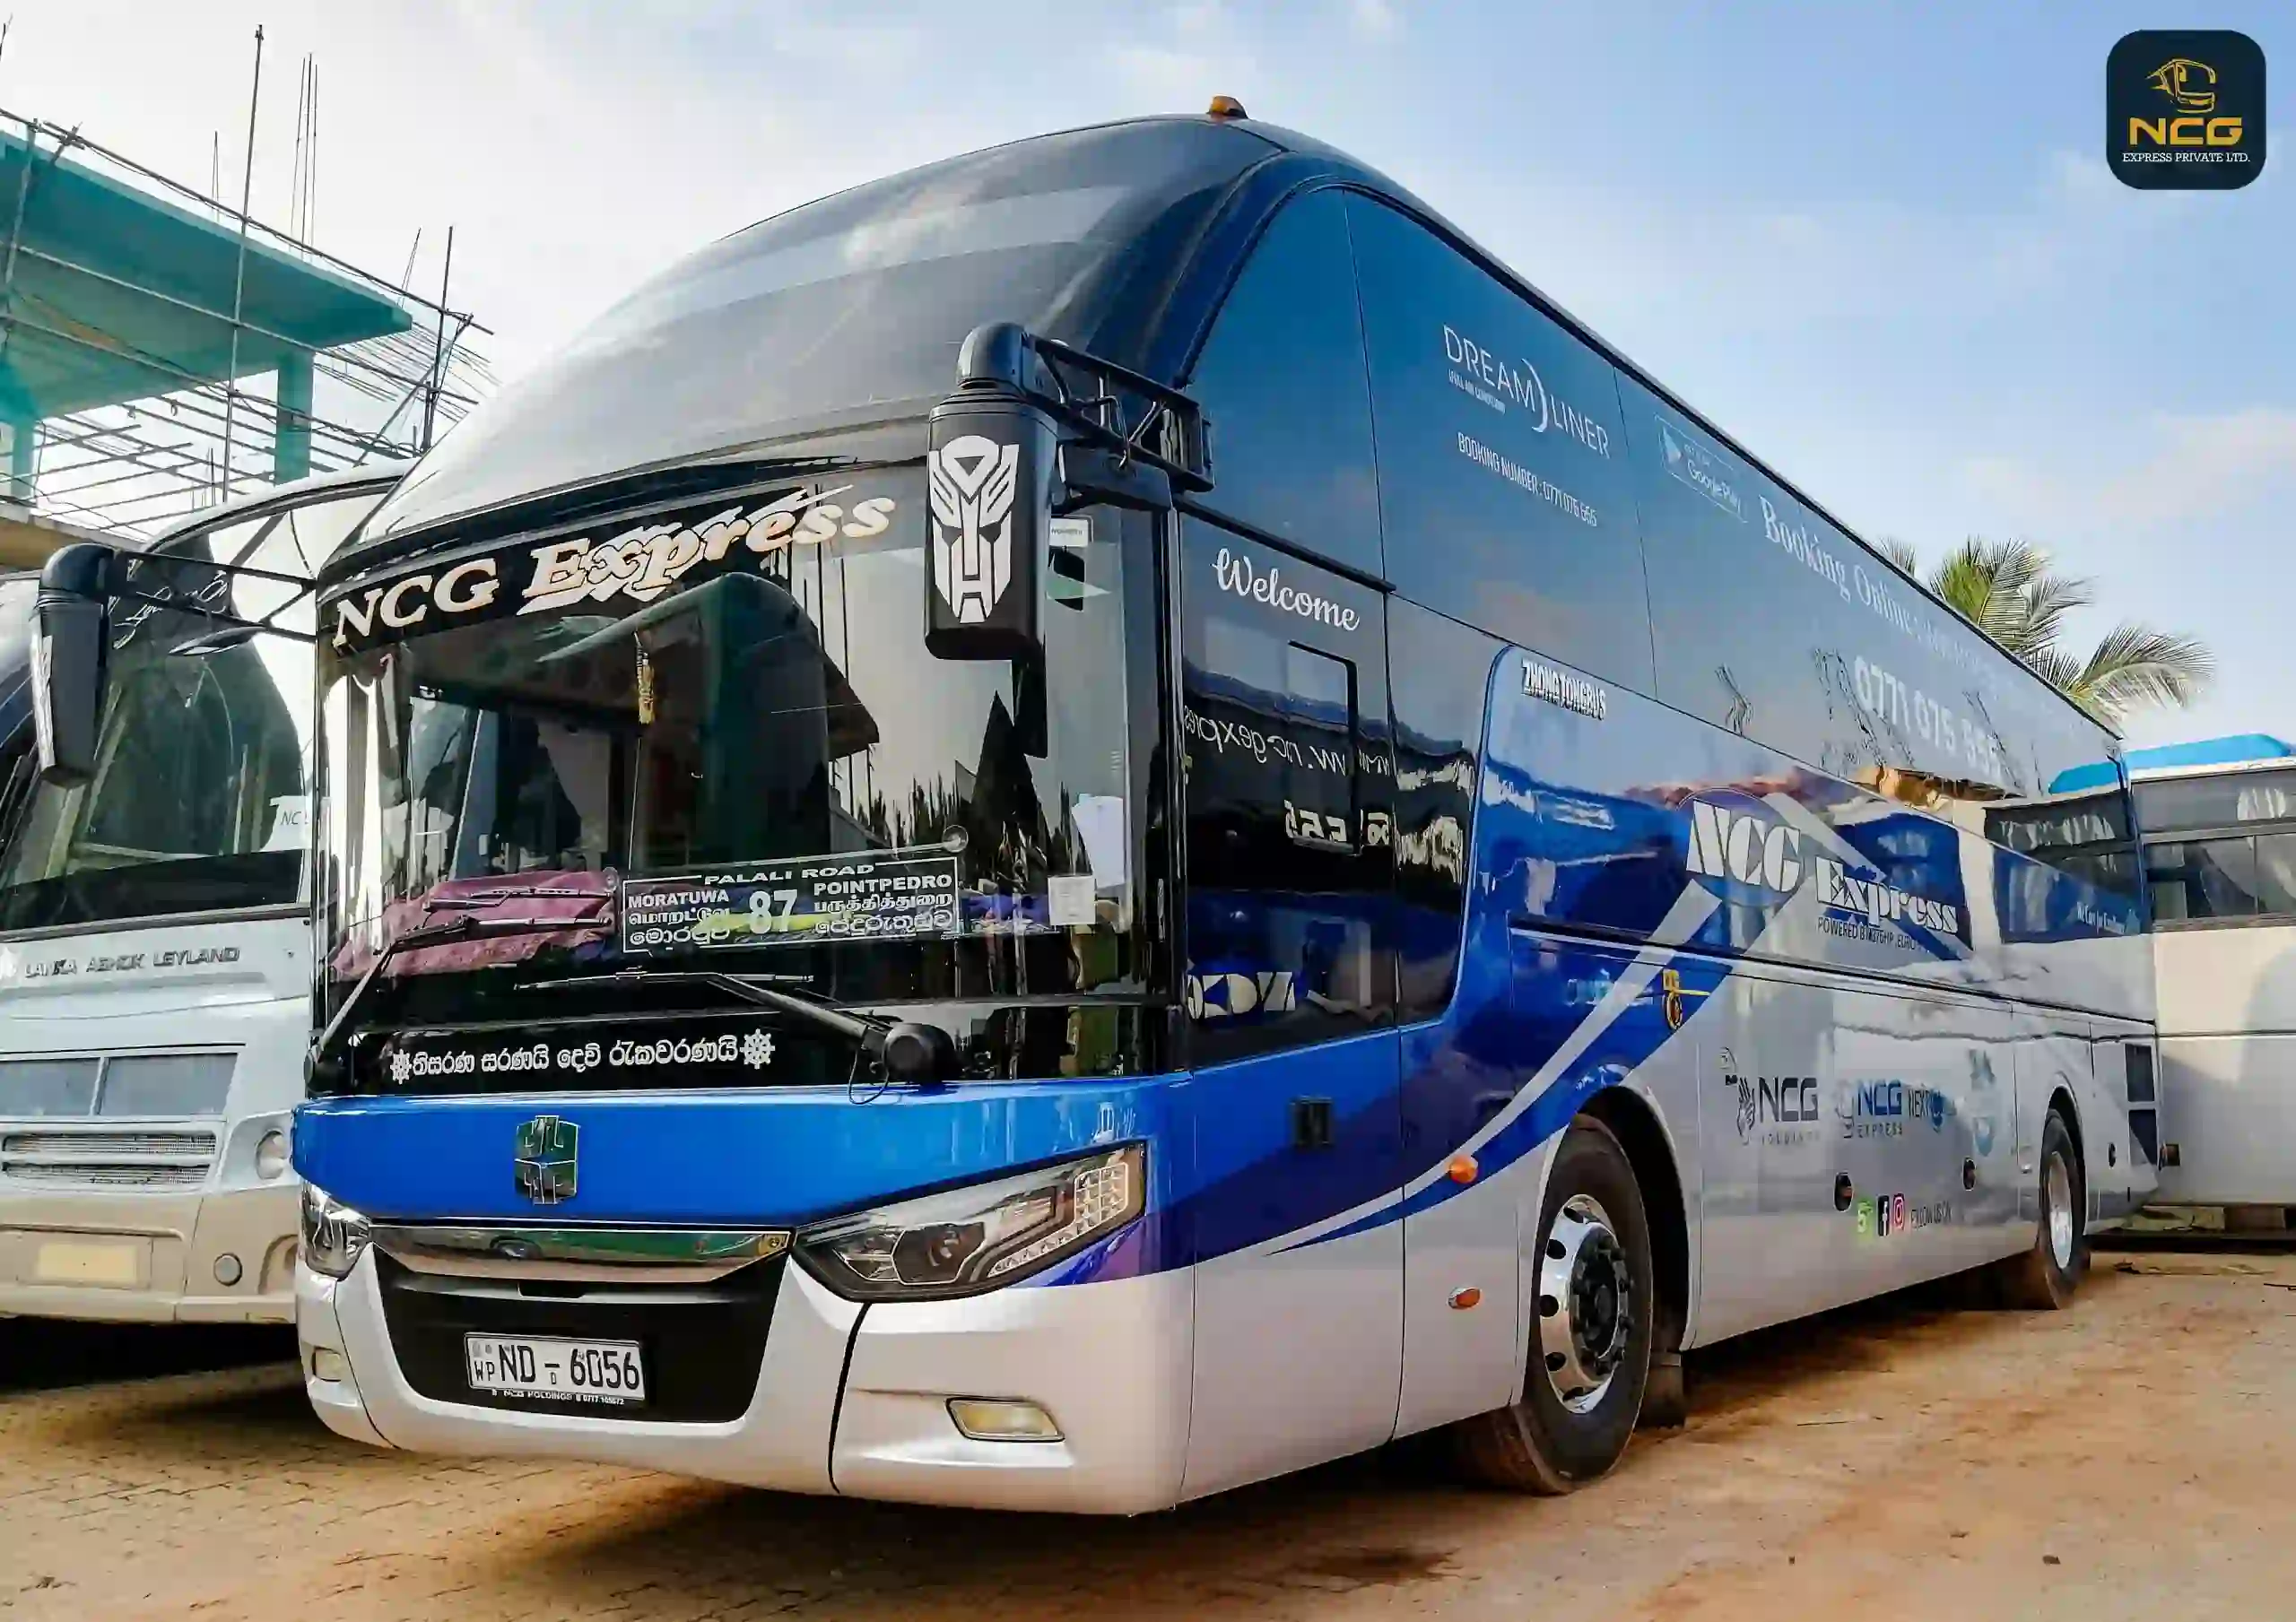 Mooratuwa to Point Pedro NCG Express Bus via Palaly Route 87